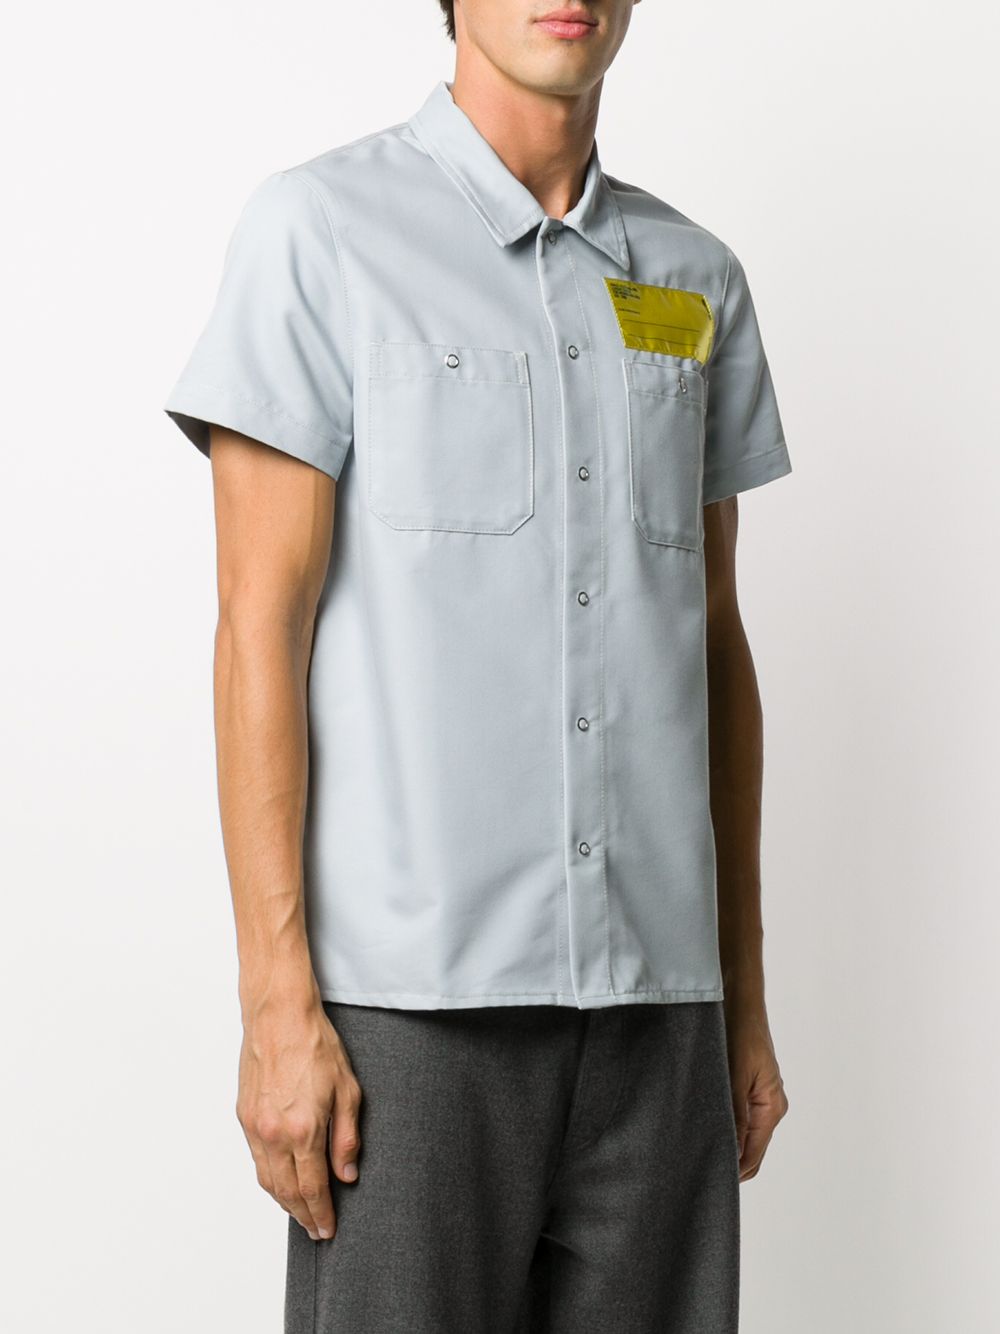 фото Helmut lang рубашка с короткими рукавами и металлическим логотипом